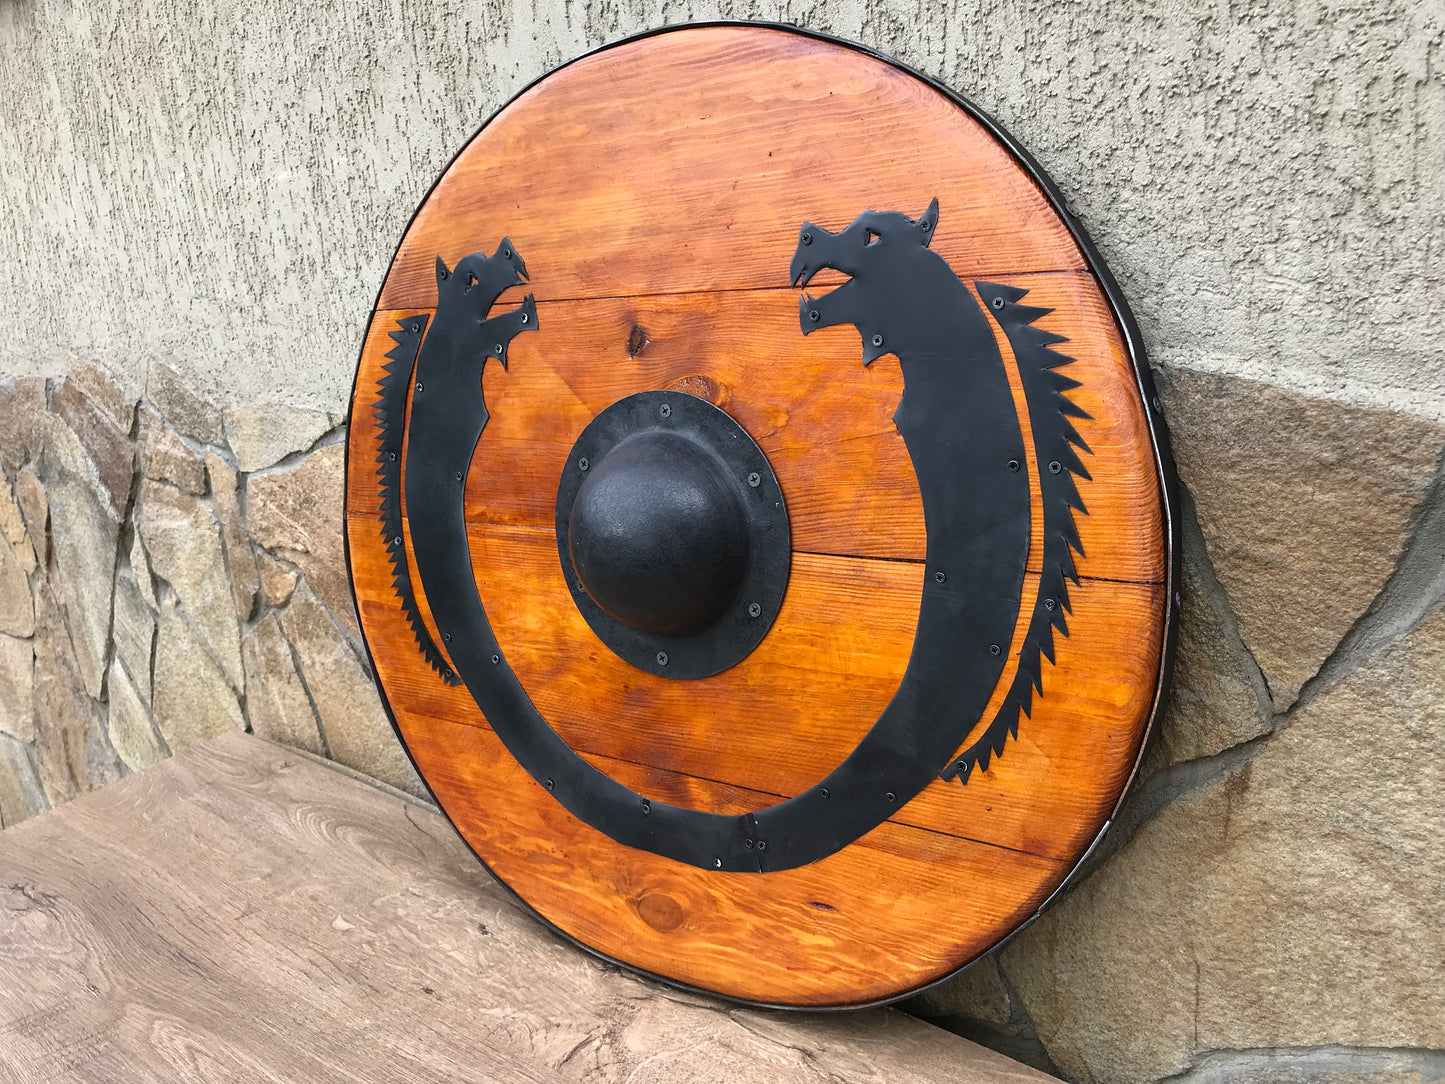 Shield, medieval shield, knight shield, custom shield, wall shield, historical shield,warrior shield,spartan shield,viking shield,viking axe